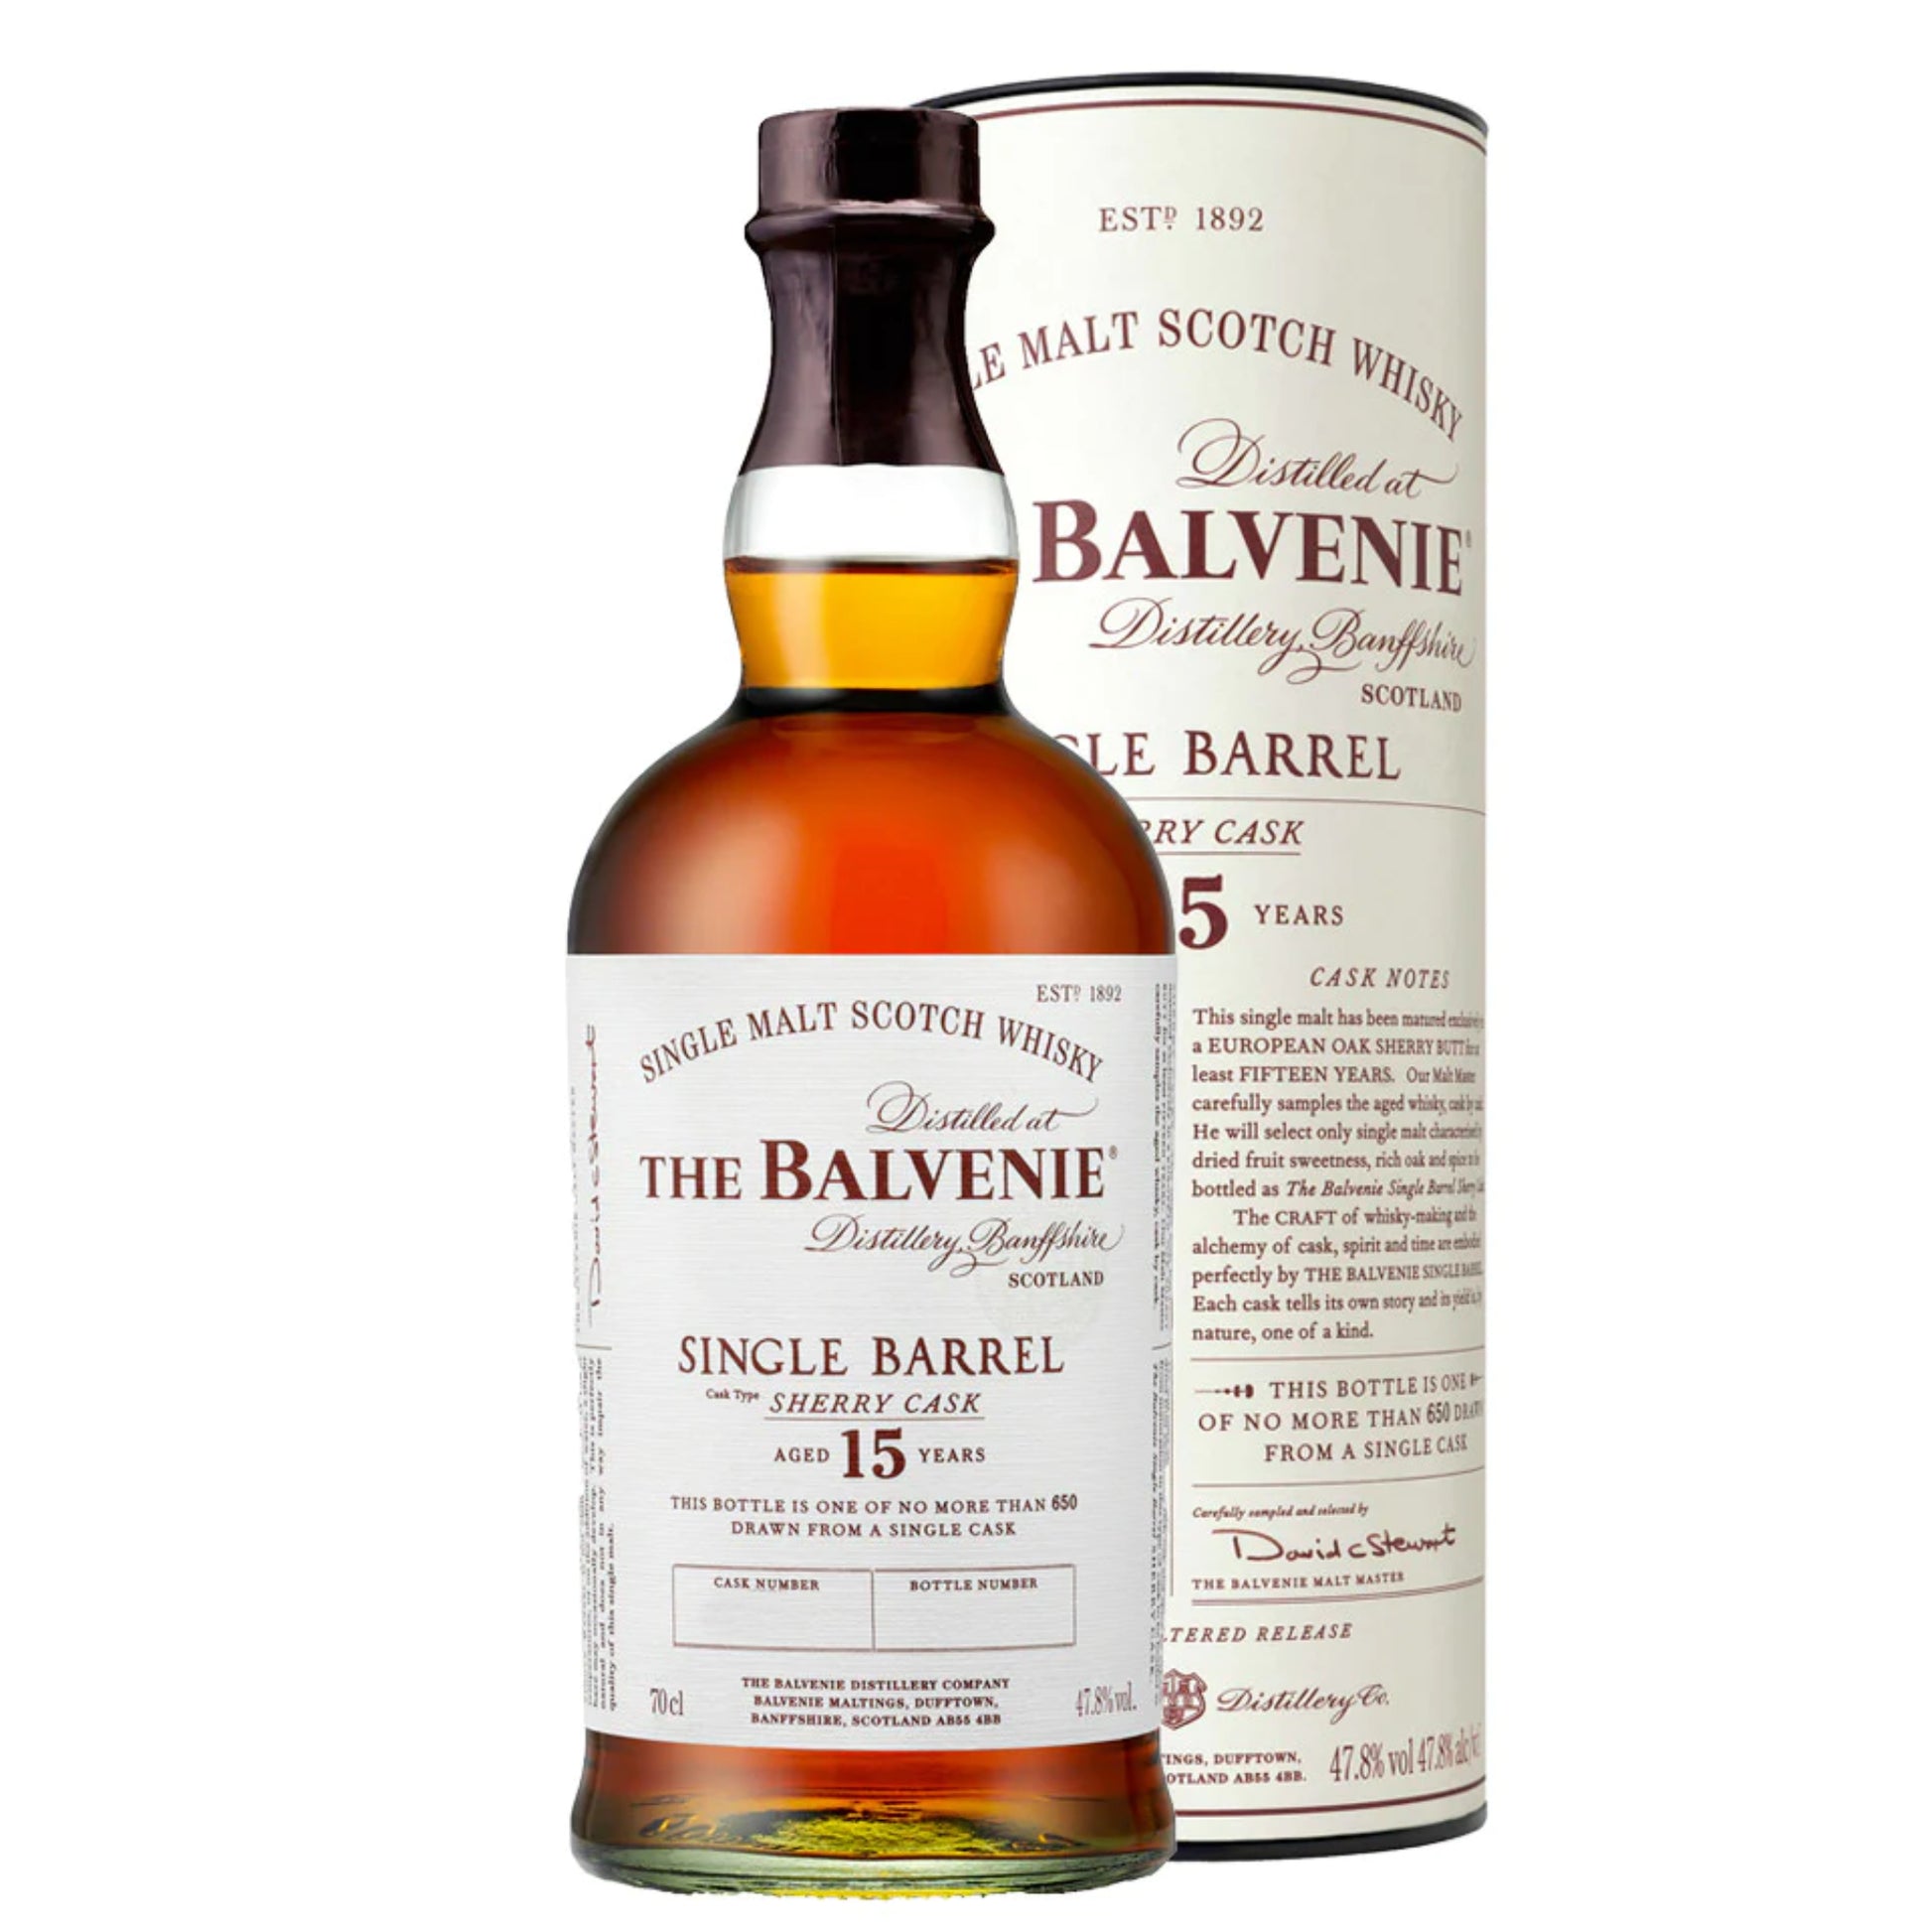 The Balvenie 15 Year Old Sherry Cask Scotch Whisky - Liquor Geeks